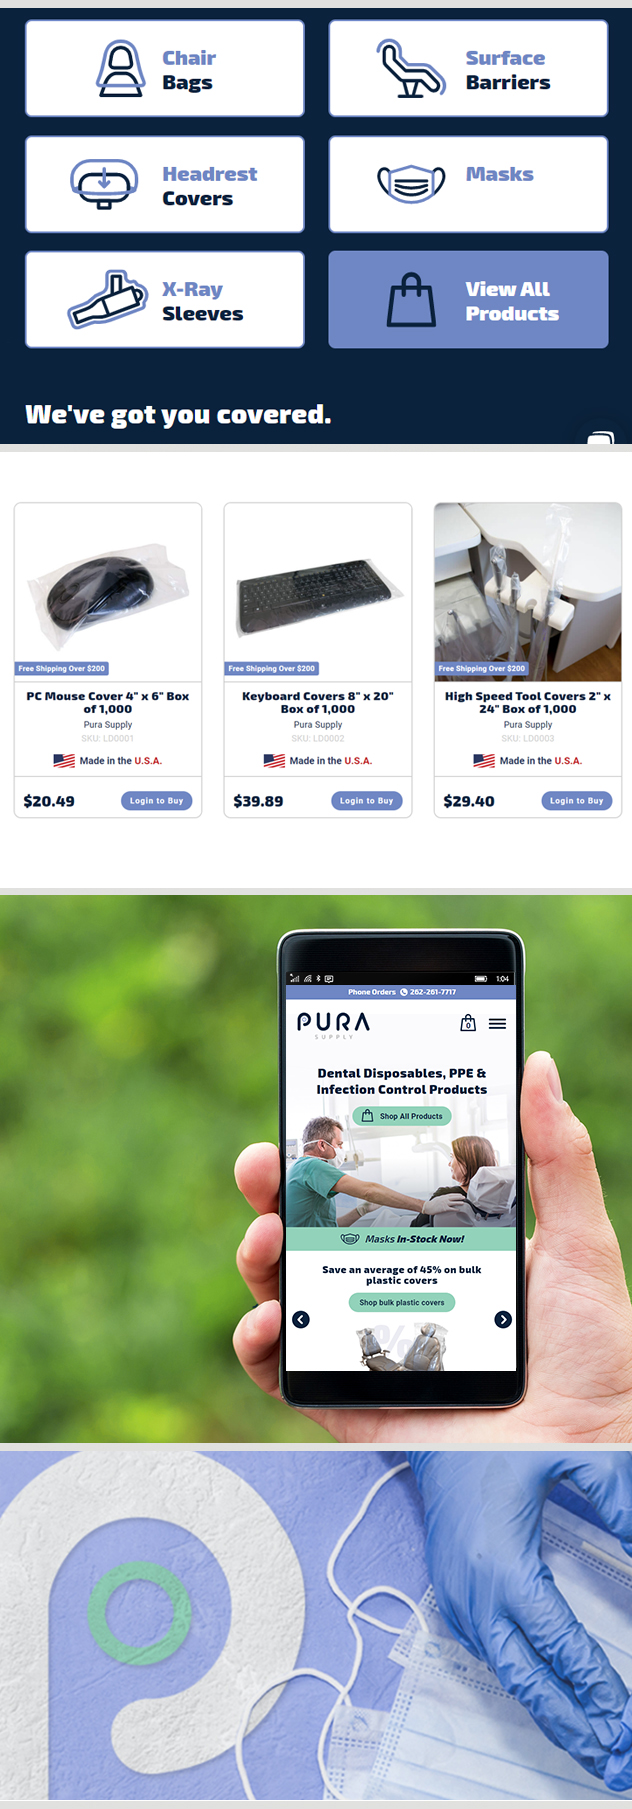 Milwaukee web marketing for Pura Supply